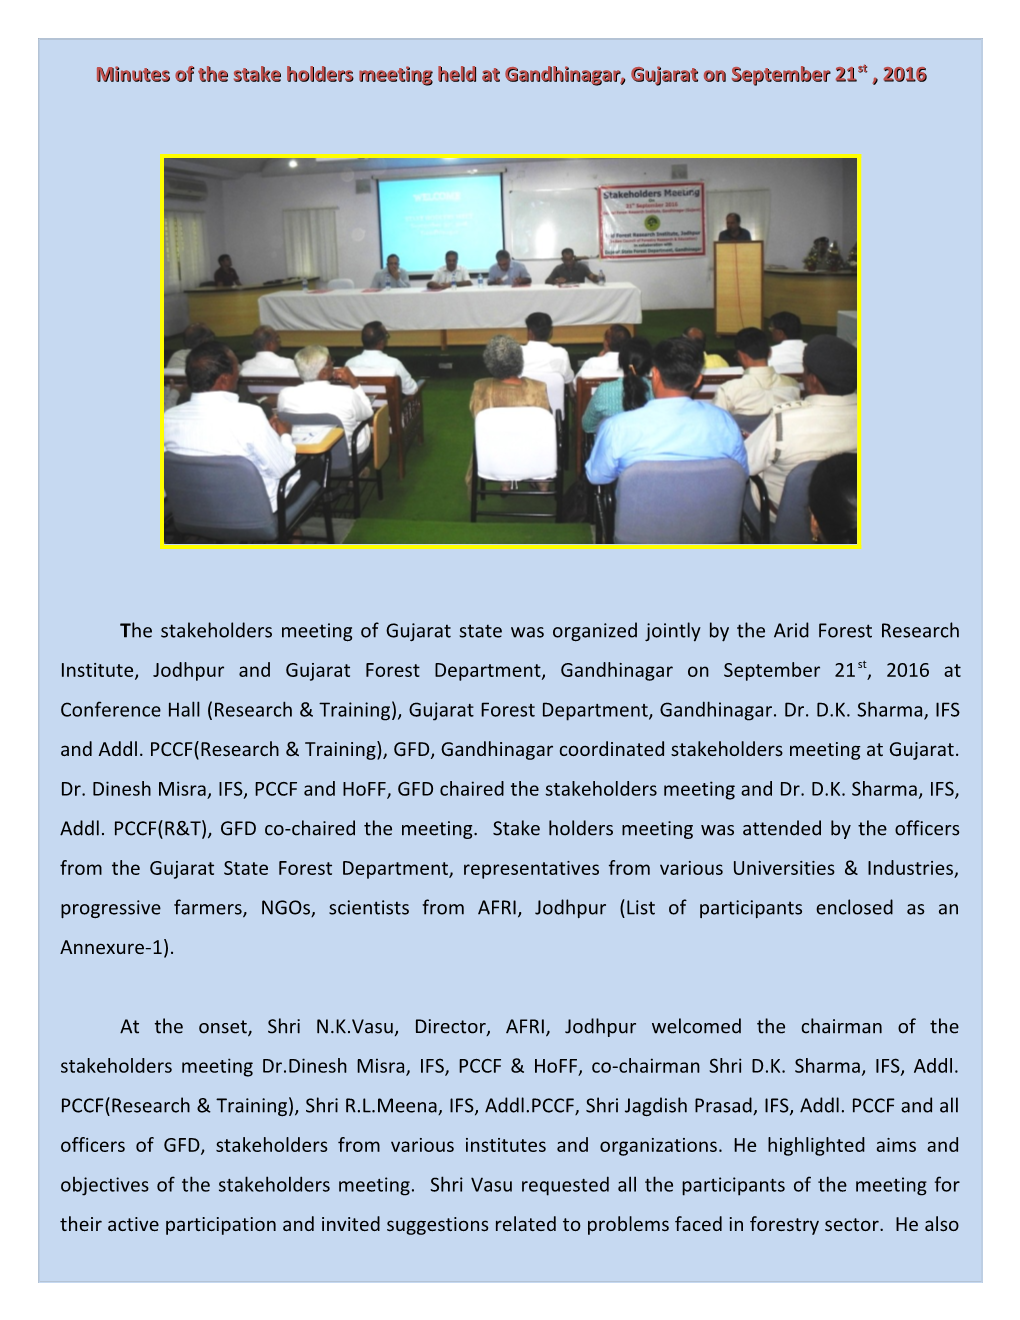 Minutes of the Stake Holders Meeting Held at Gandhinagar, Gujarat on September 21St , 2016